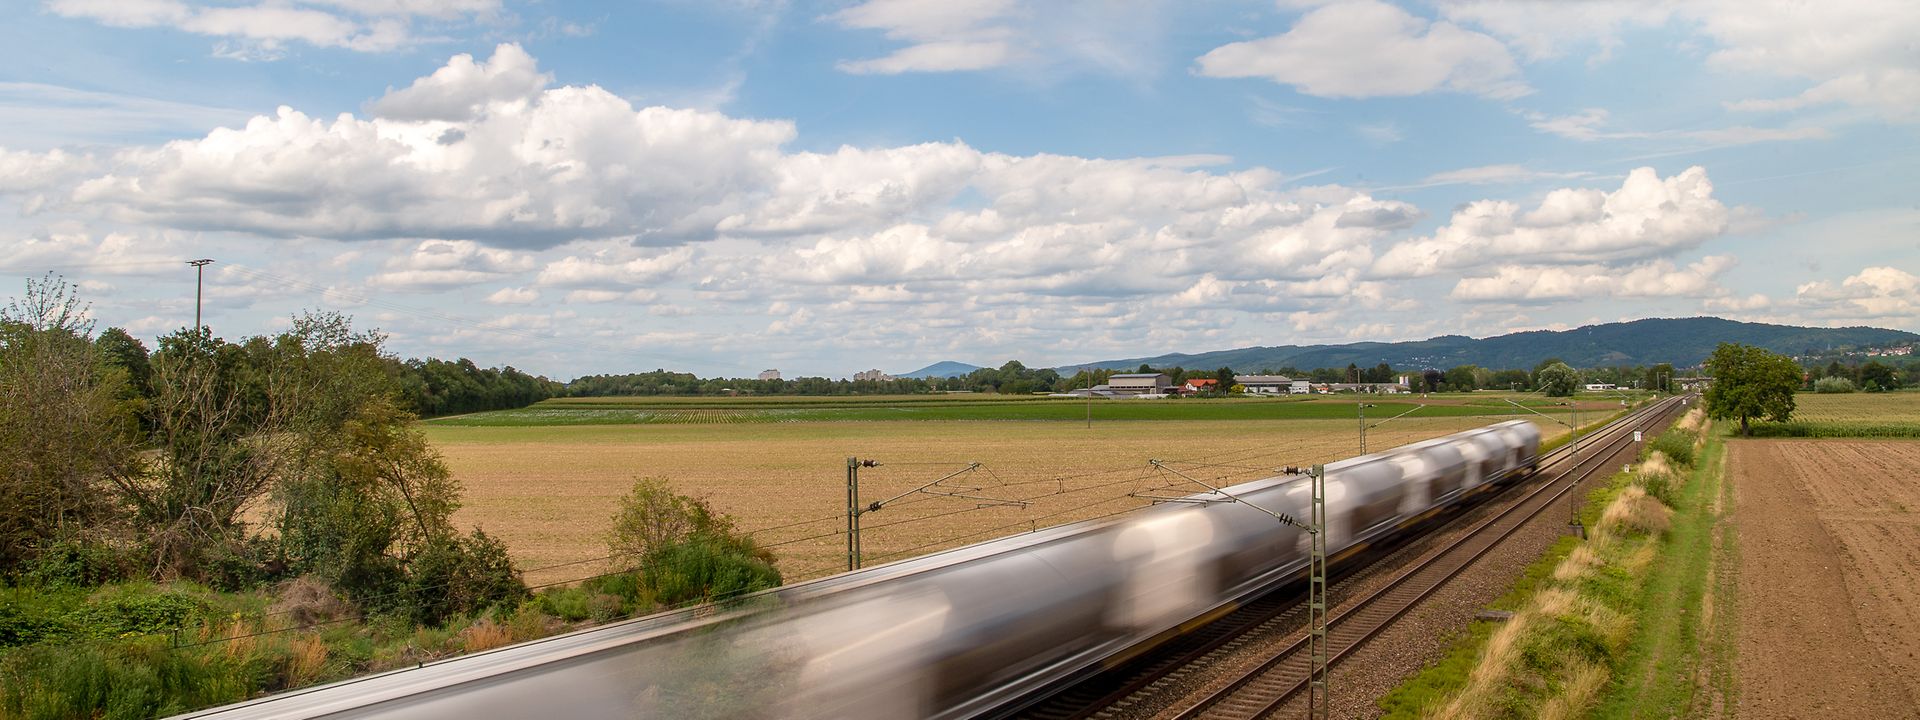 A shuttle train speeds through the countryside.